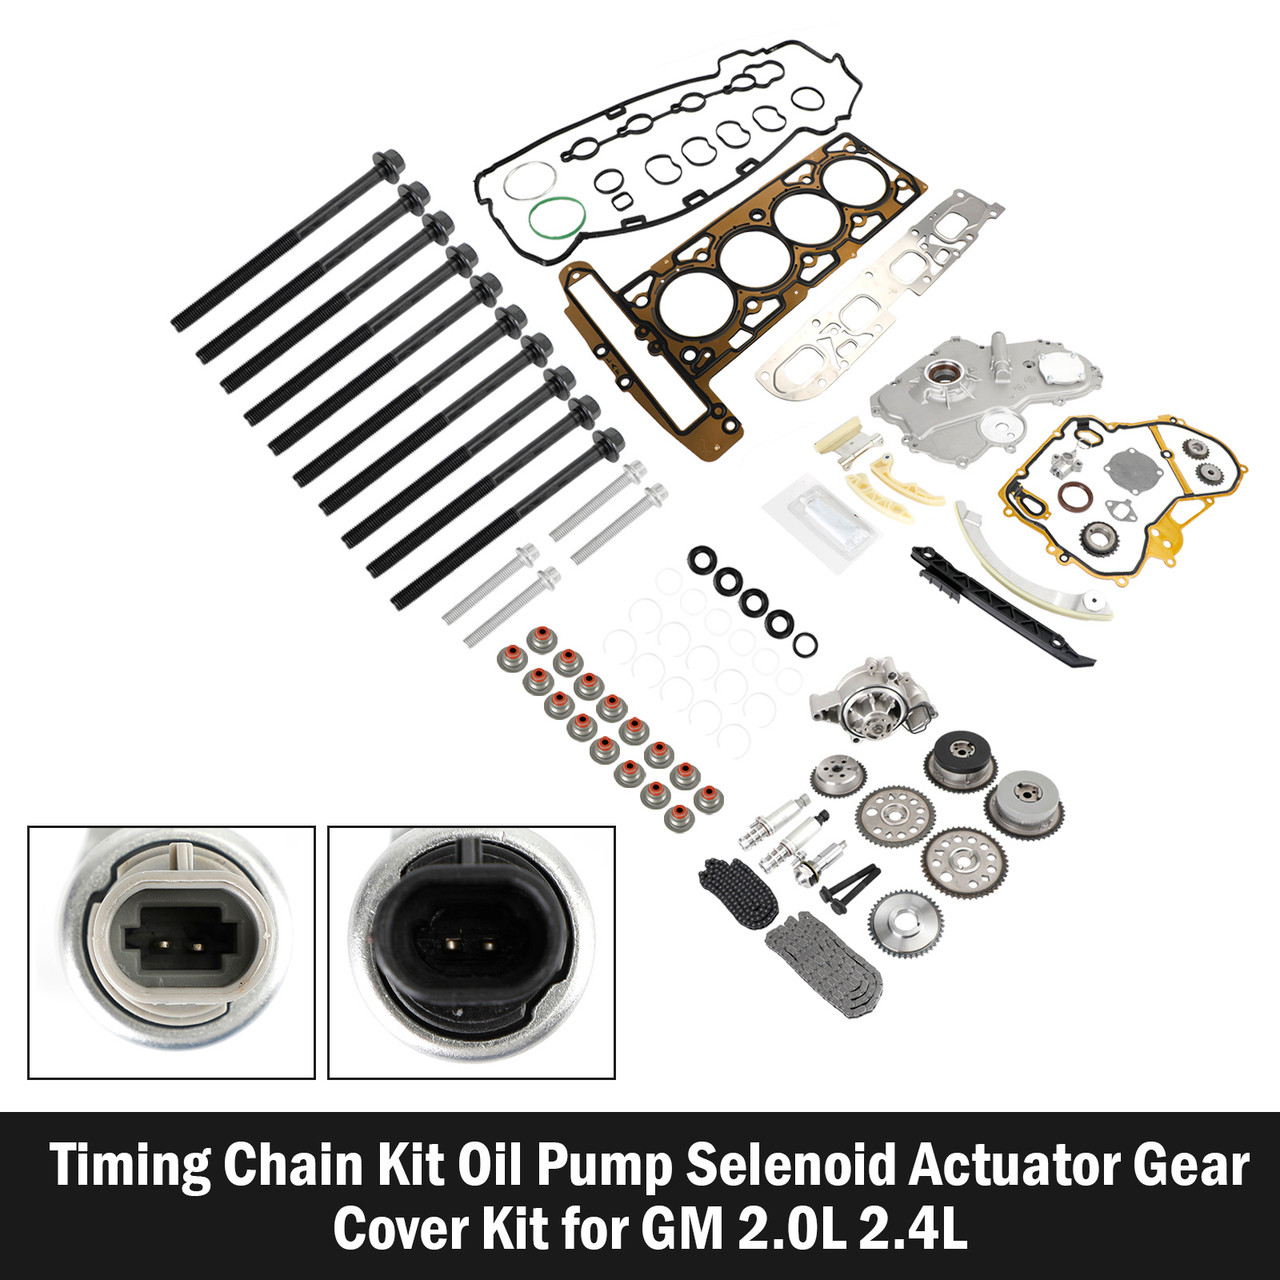 2006-2008 CHEVROLET HHR 2.4L Timing Chain Kit Oil Pump Selenoid Actuator Gear Cover Kit